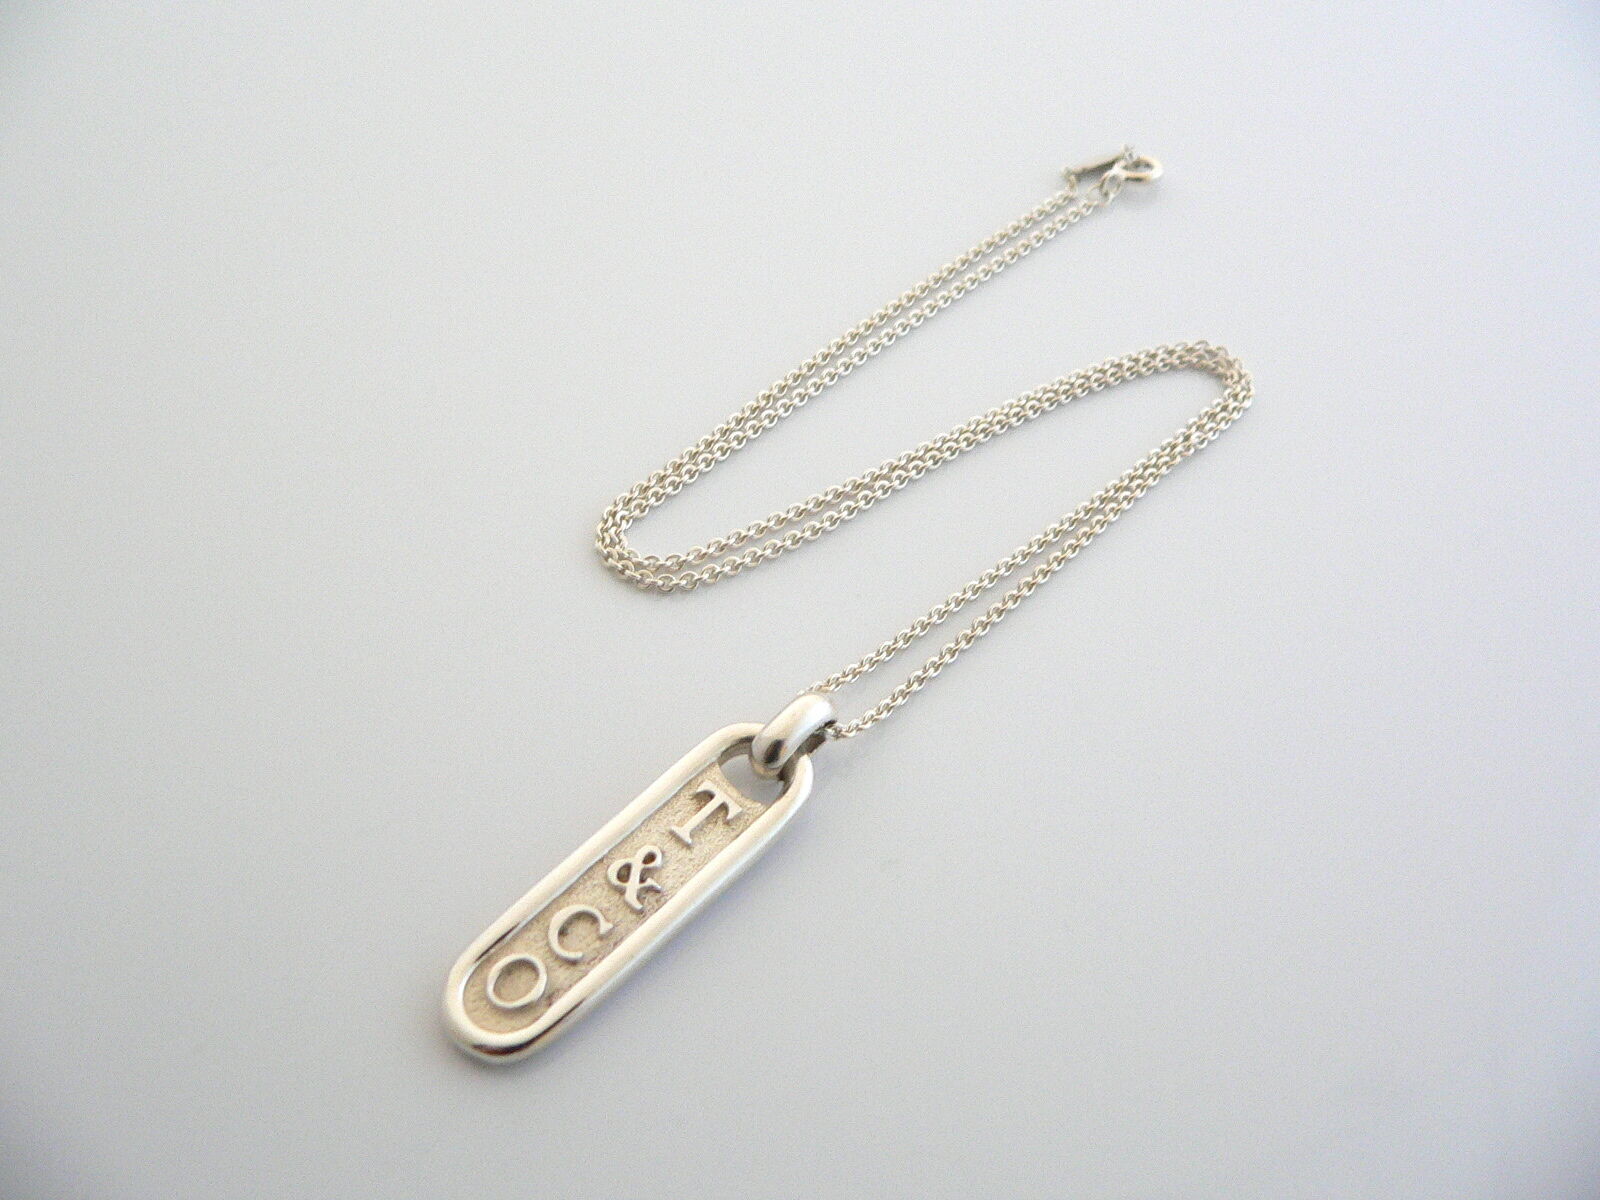 Tiffany & Co Silver Zipper Bar Necklace Pendant Charm Chain T & Co Gift Love